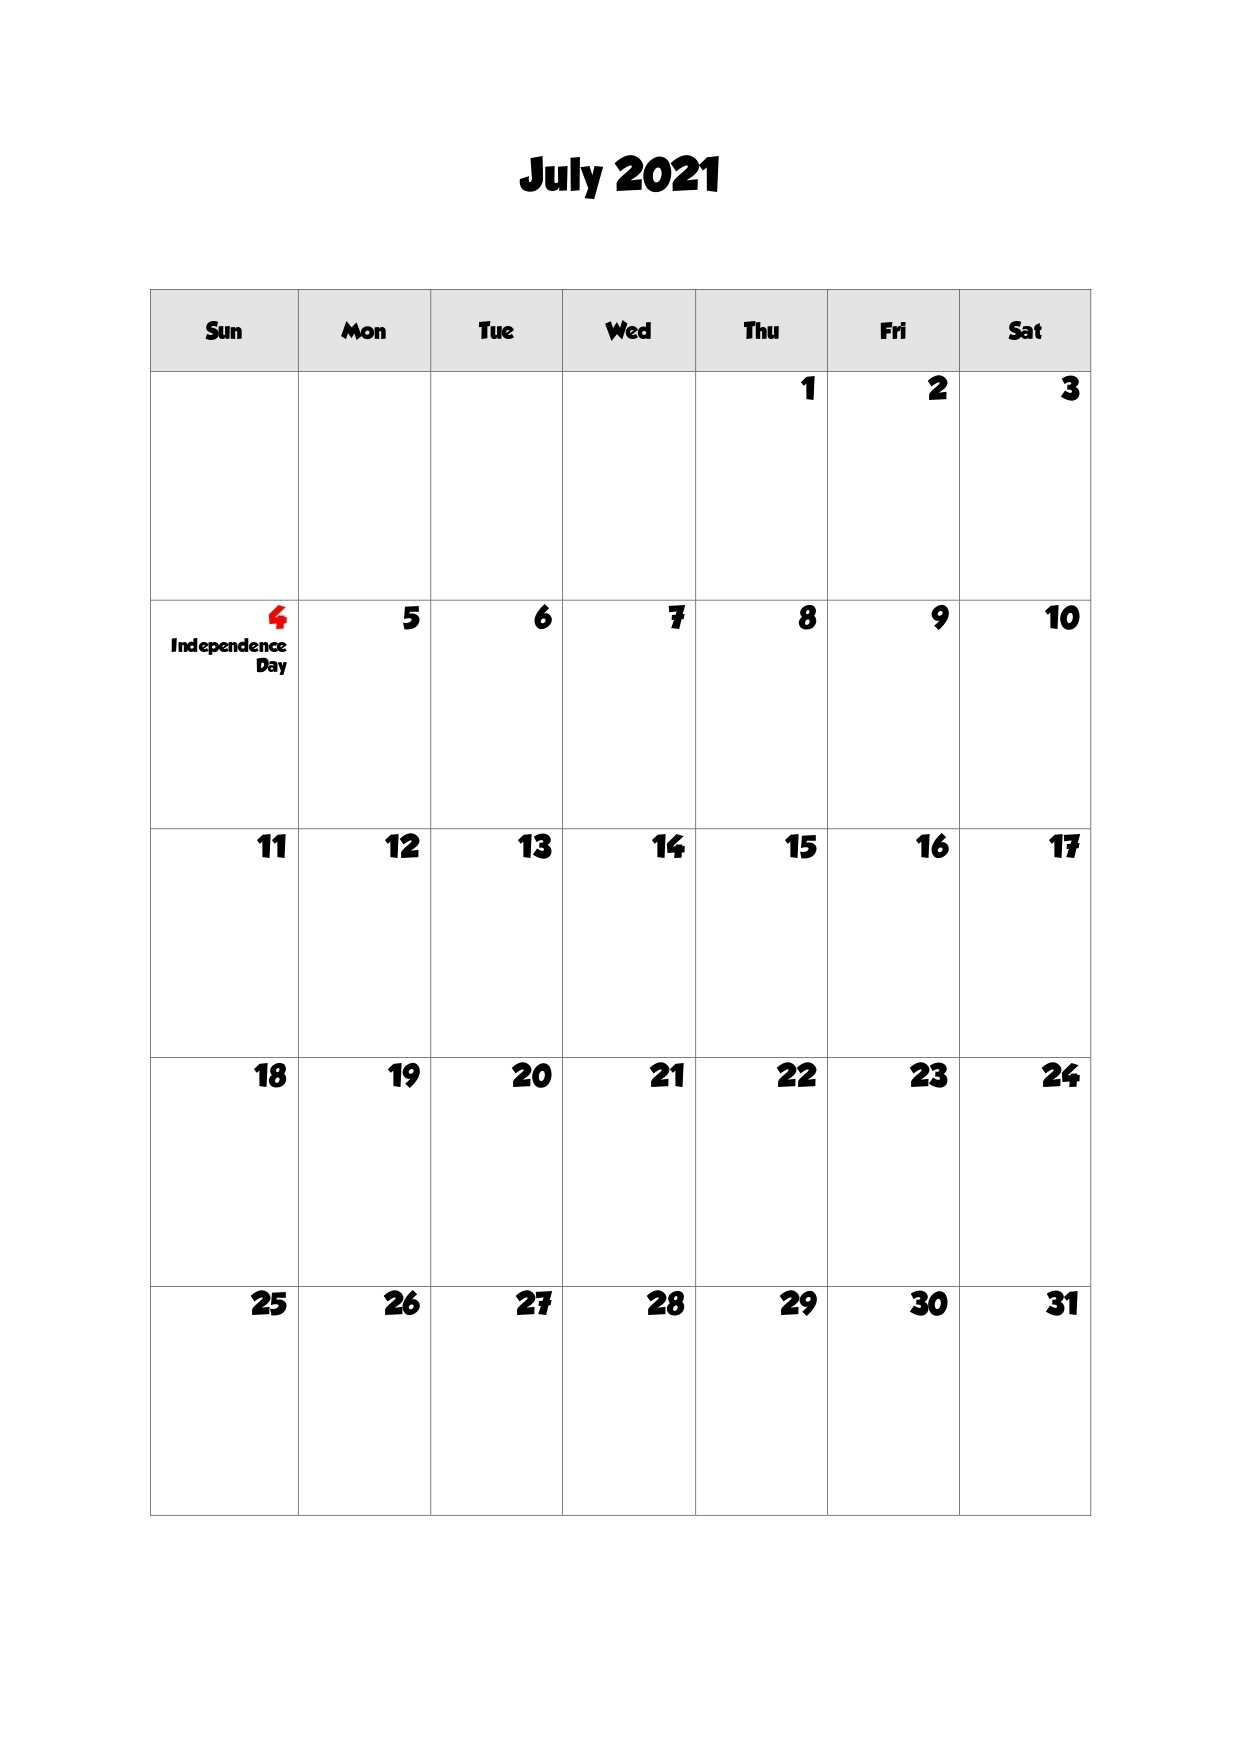 45+ July 2021 Calendar Printable, July 2021 Calendar Pdf, Blank, Free February Through July 2021 Calendar